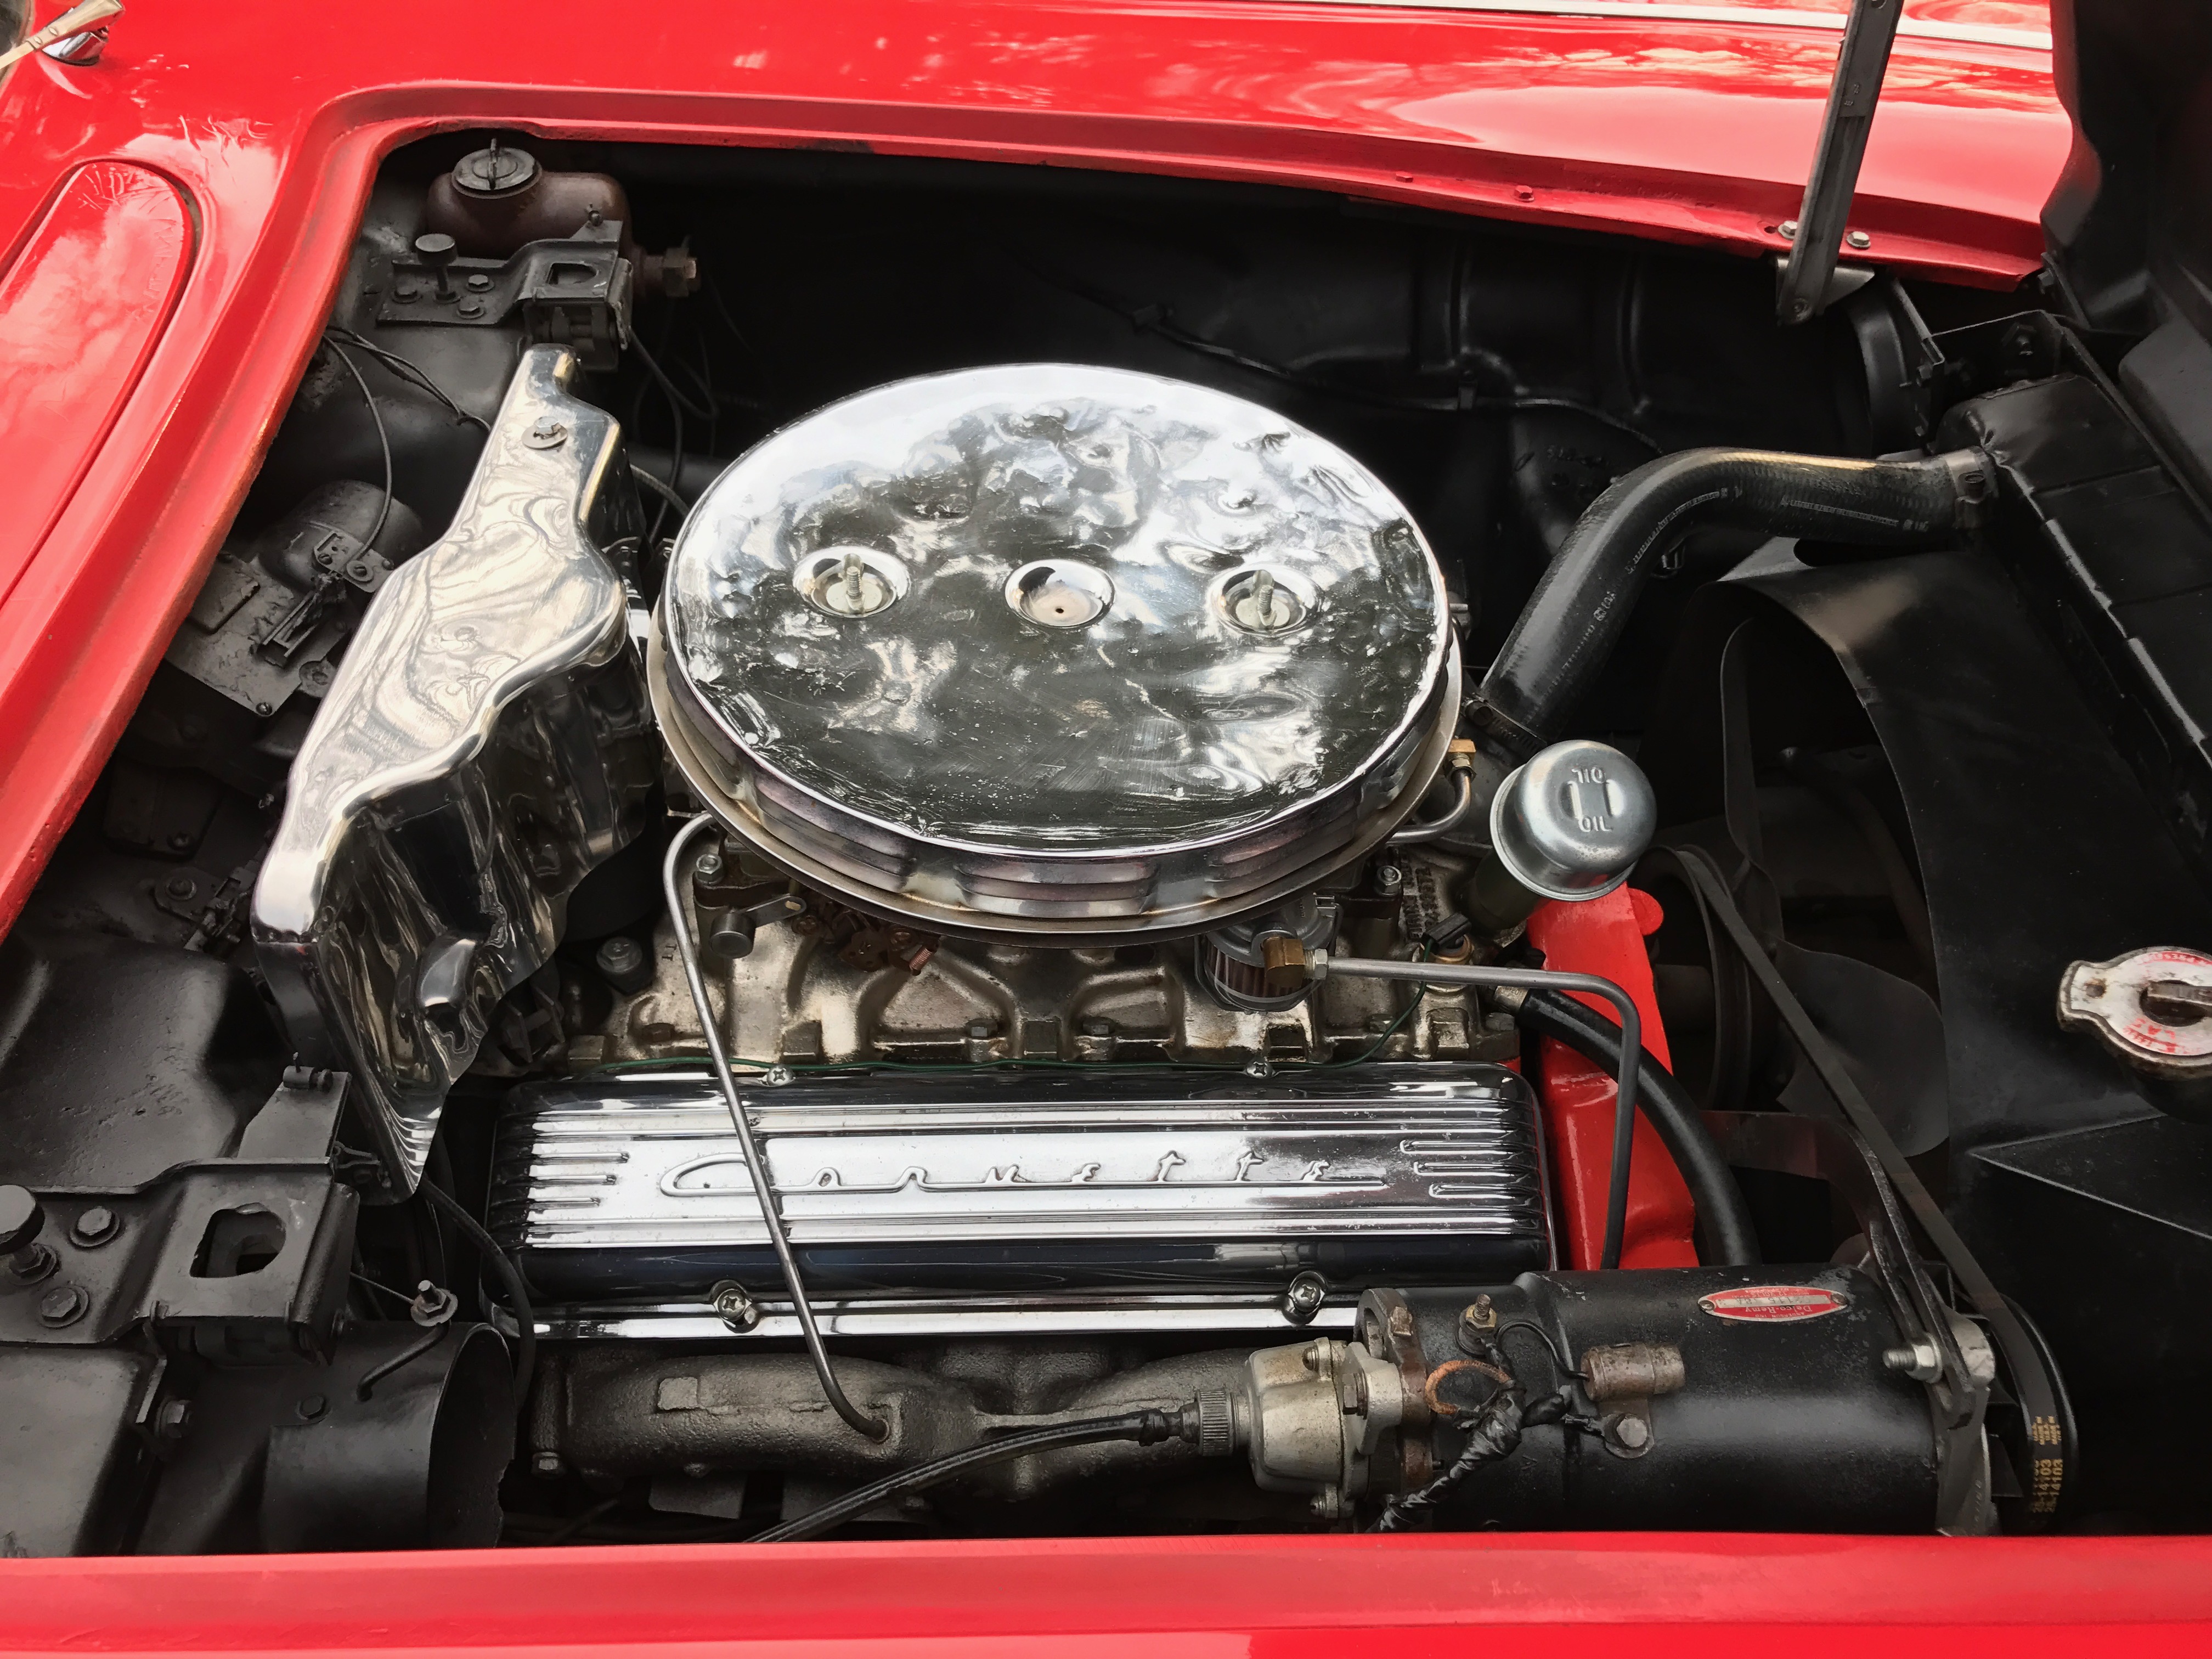 FS (For Sale) F/S: 1959 Corvette Dual Quad 270hp/283ci 4-Speed, Red